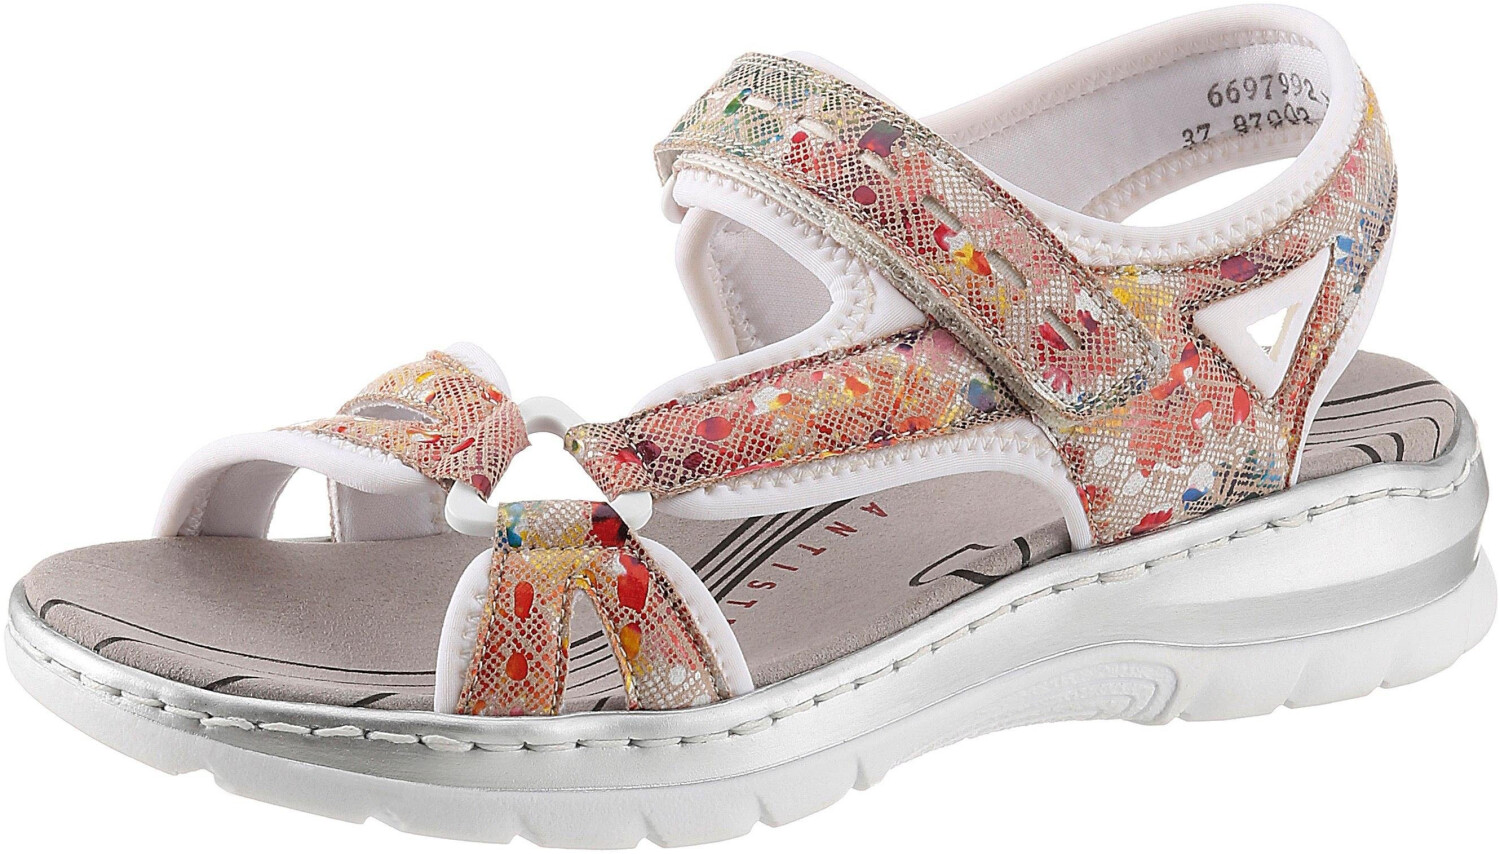 Buy Rieker Antistress Sandals (66979) from £40.01 – Best Deals idealo.co.uk